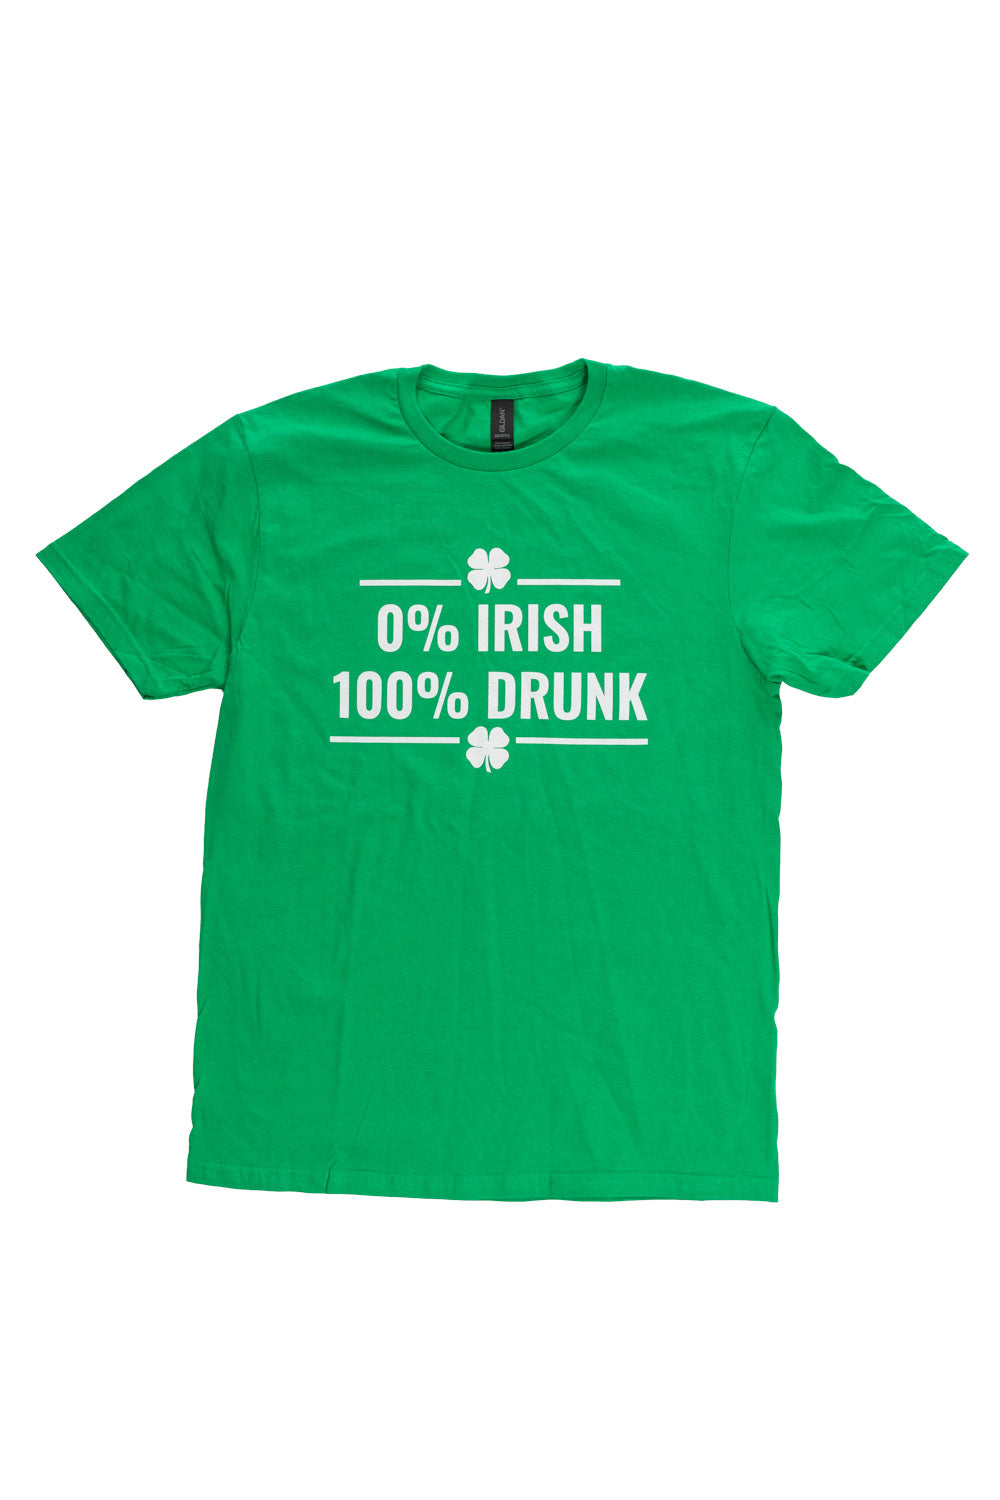 "0% Irish 100% Drunk" - Unisex St. Patrick's Day T-Shirt